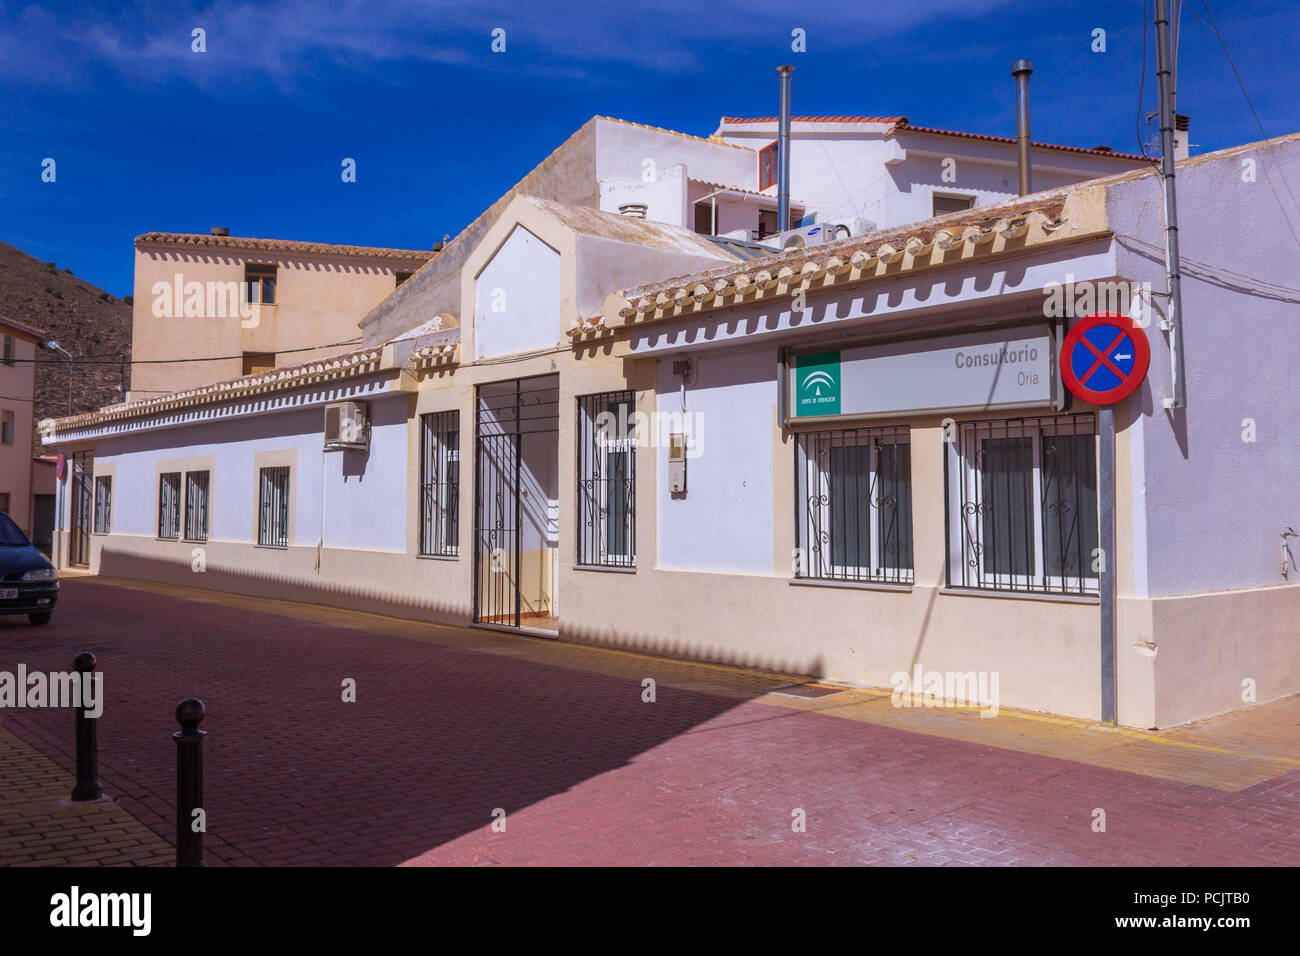 Doctors Surgery, Consultorio, Medical center, in Oria a Small Rural Town in Almanzora Valley, Almeria province, Andalucía, Spain Stock Photo